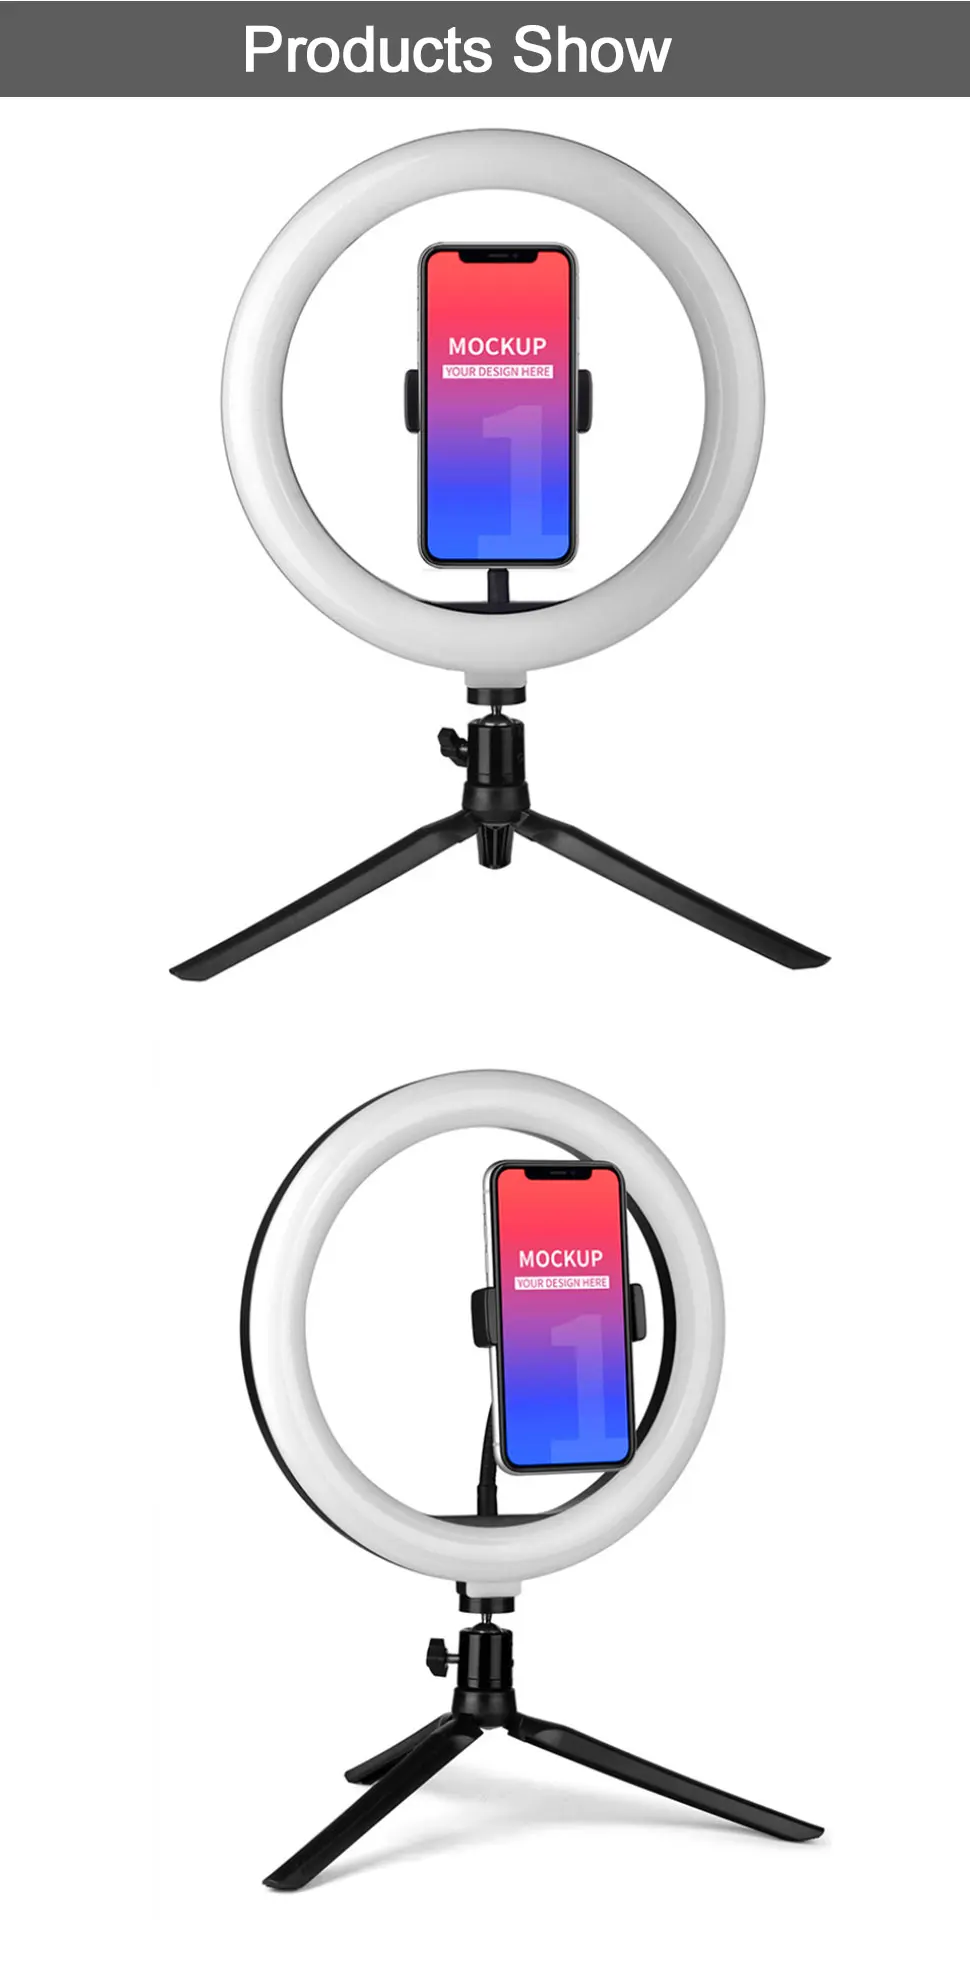 H0104062e26f543f793457ddabd8f1c0dJ Orsda 10-12 Inch Led Ring Light with Tripod Ring Light Selfie Ring Light RGB 26 Colors Video Light Makeup Live Video Streaming